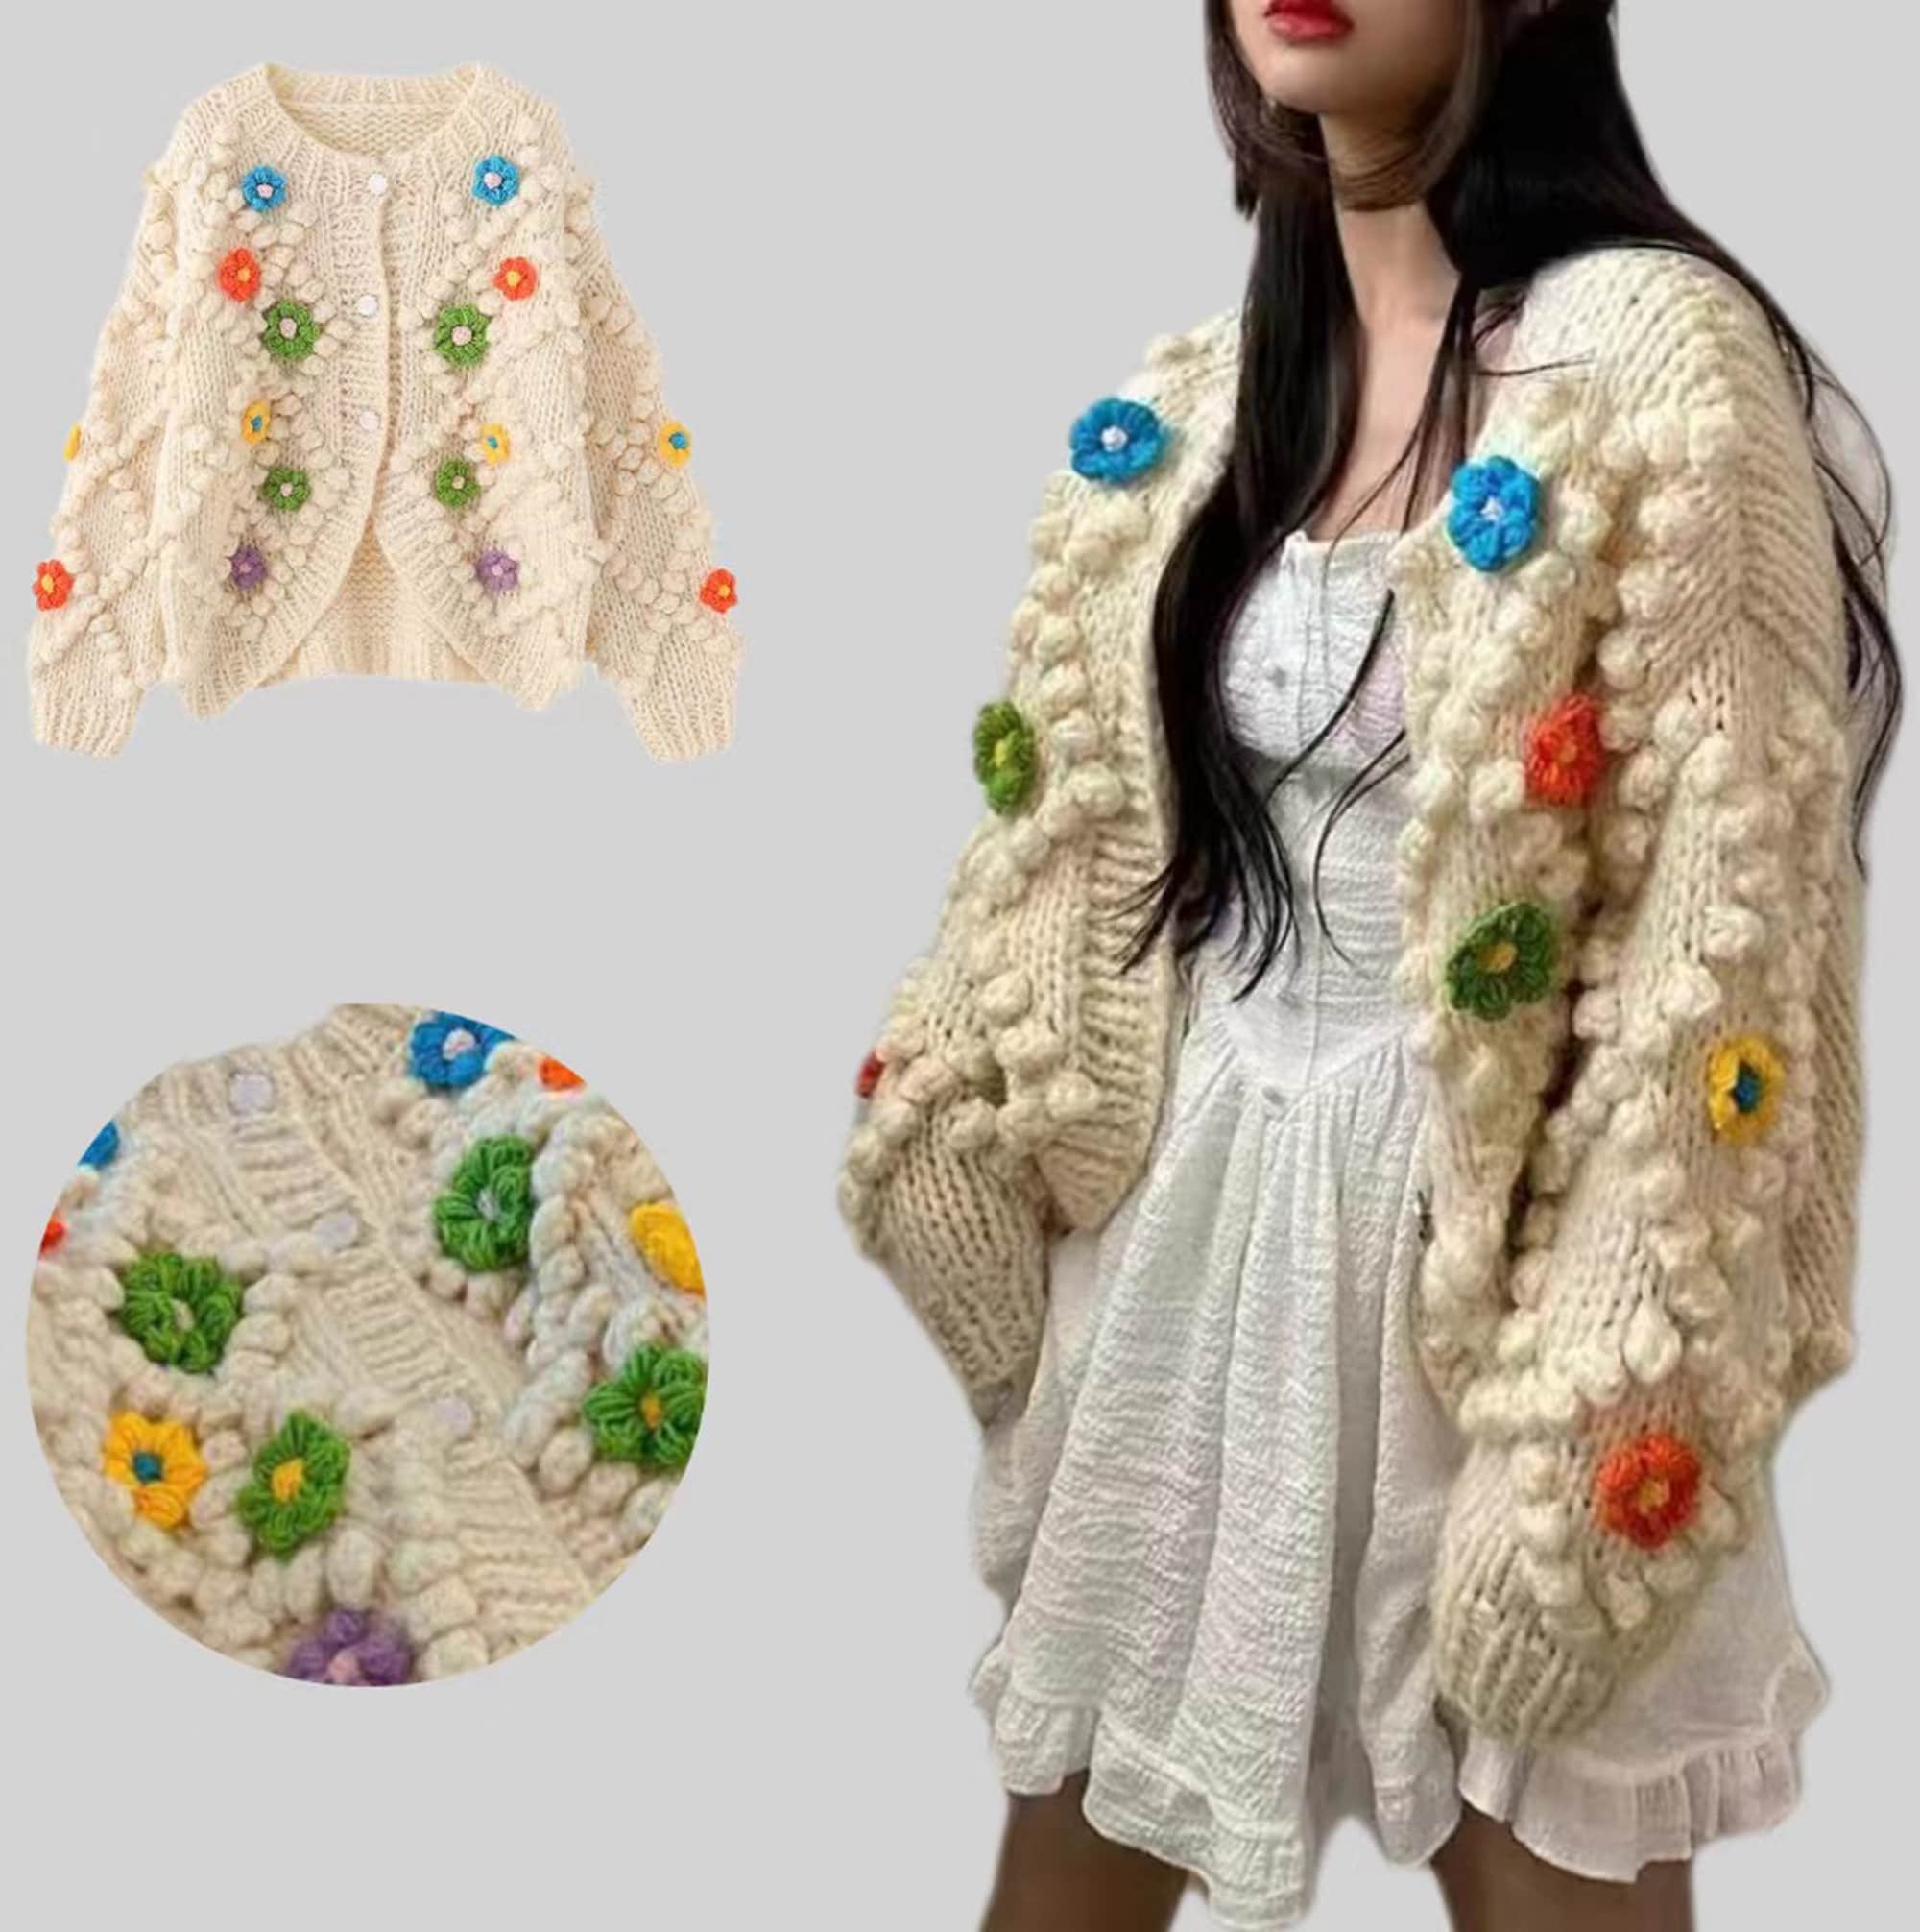 m L Kleding Dameskleding Sweaters Vesten jas Vintage kleurrijke wol handgebreide open vest 